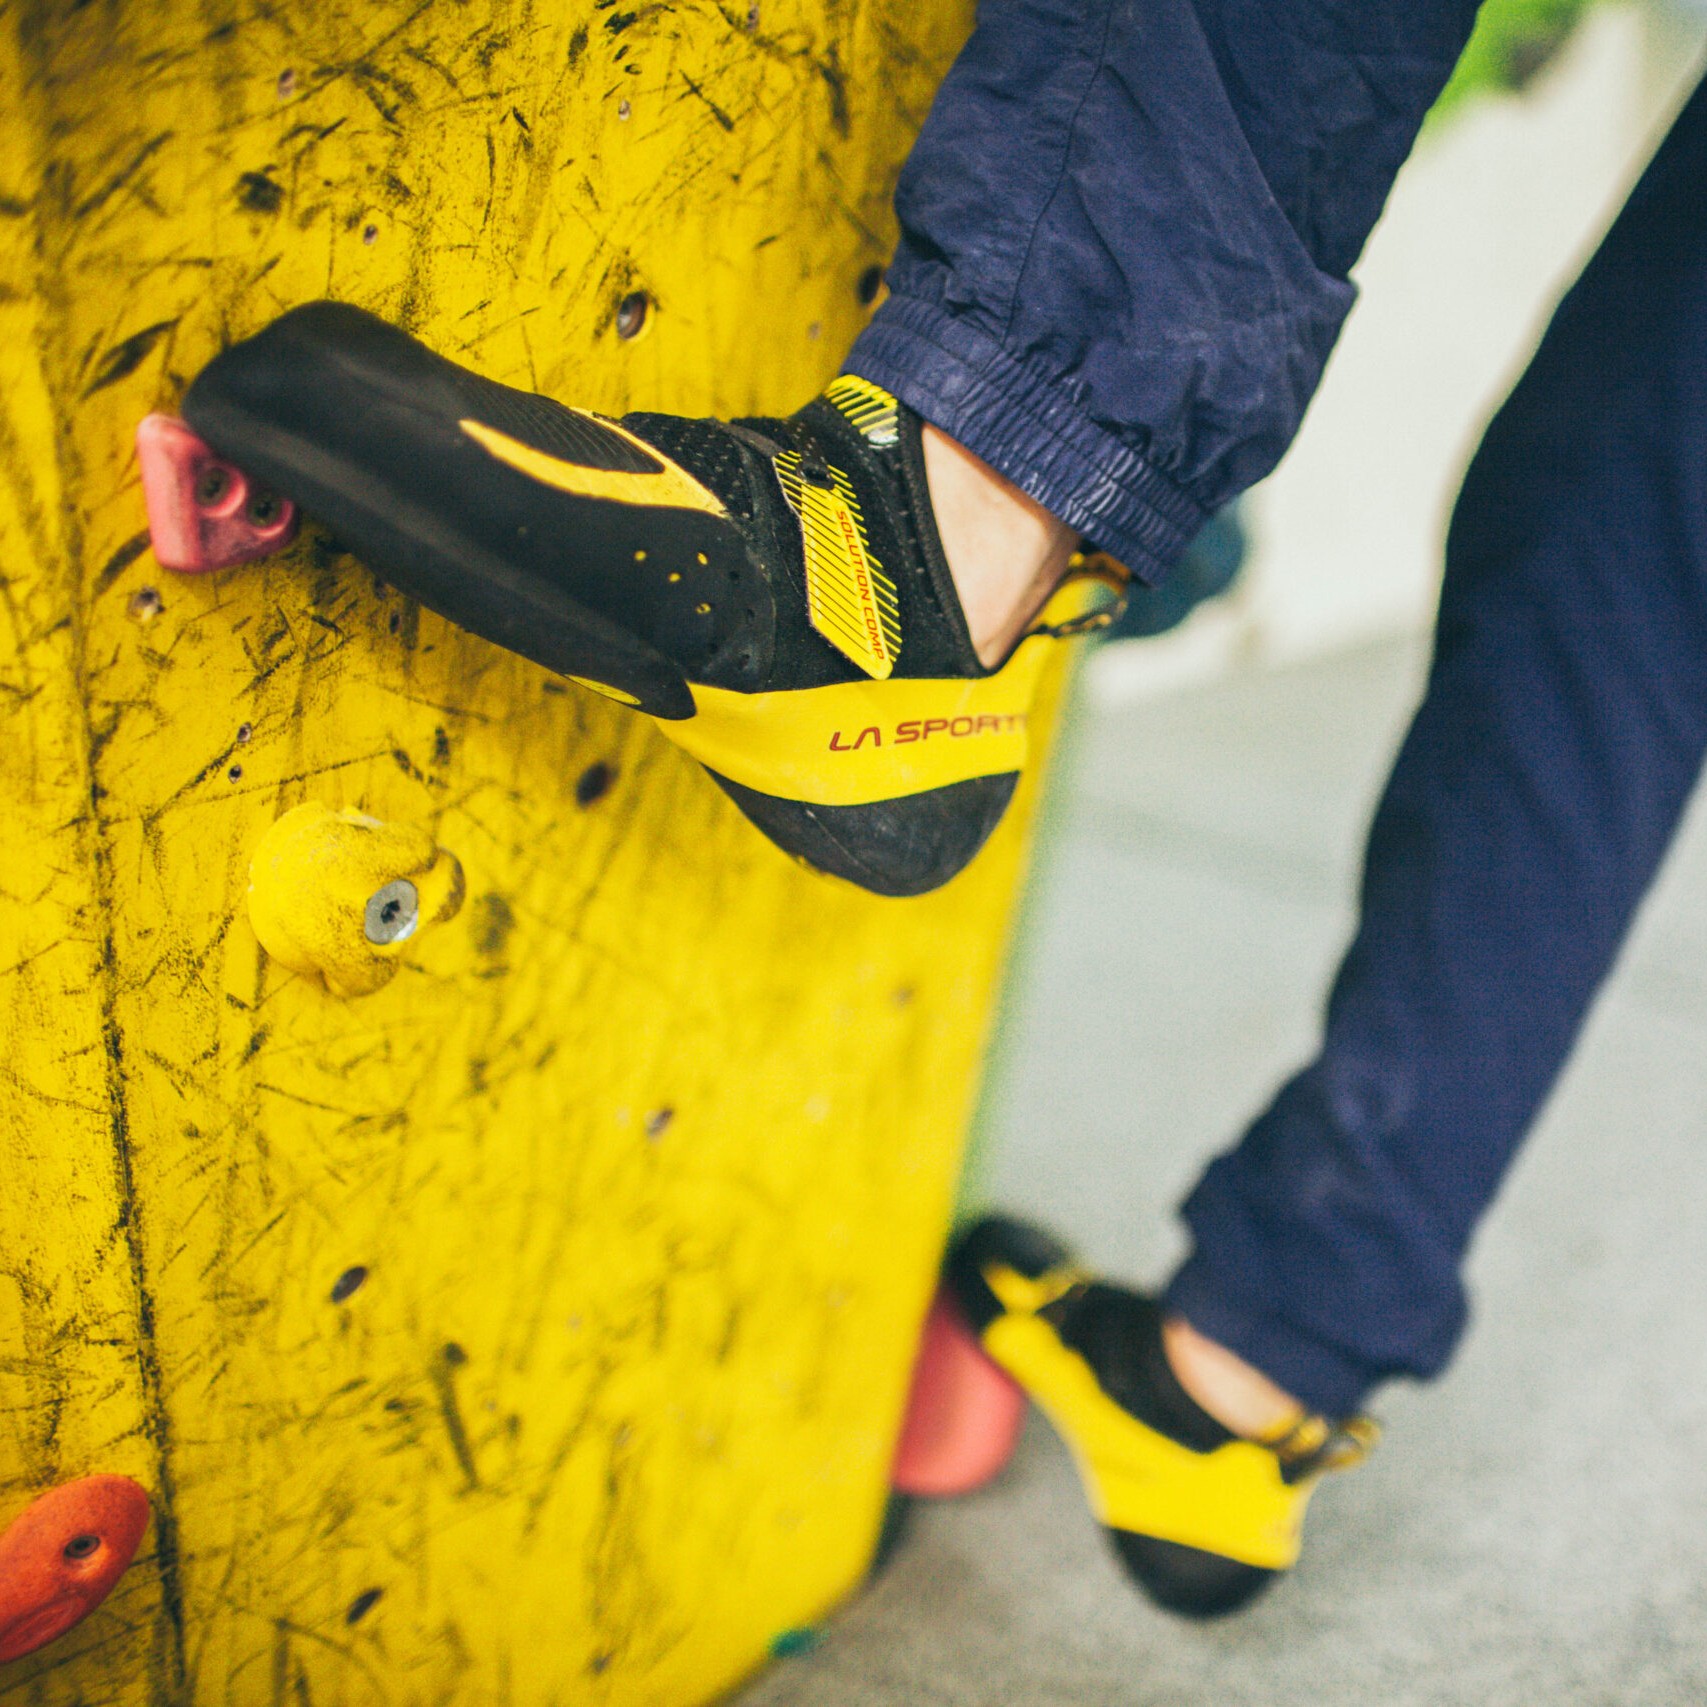 La Sportiva Solution Comp Rock Climbing Shoe